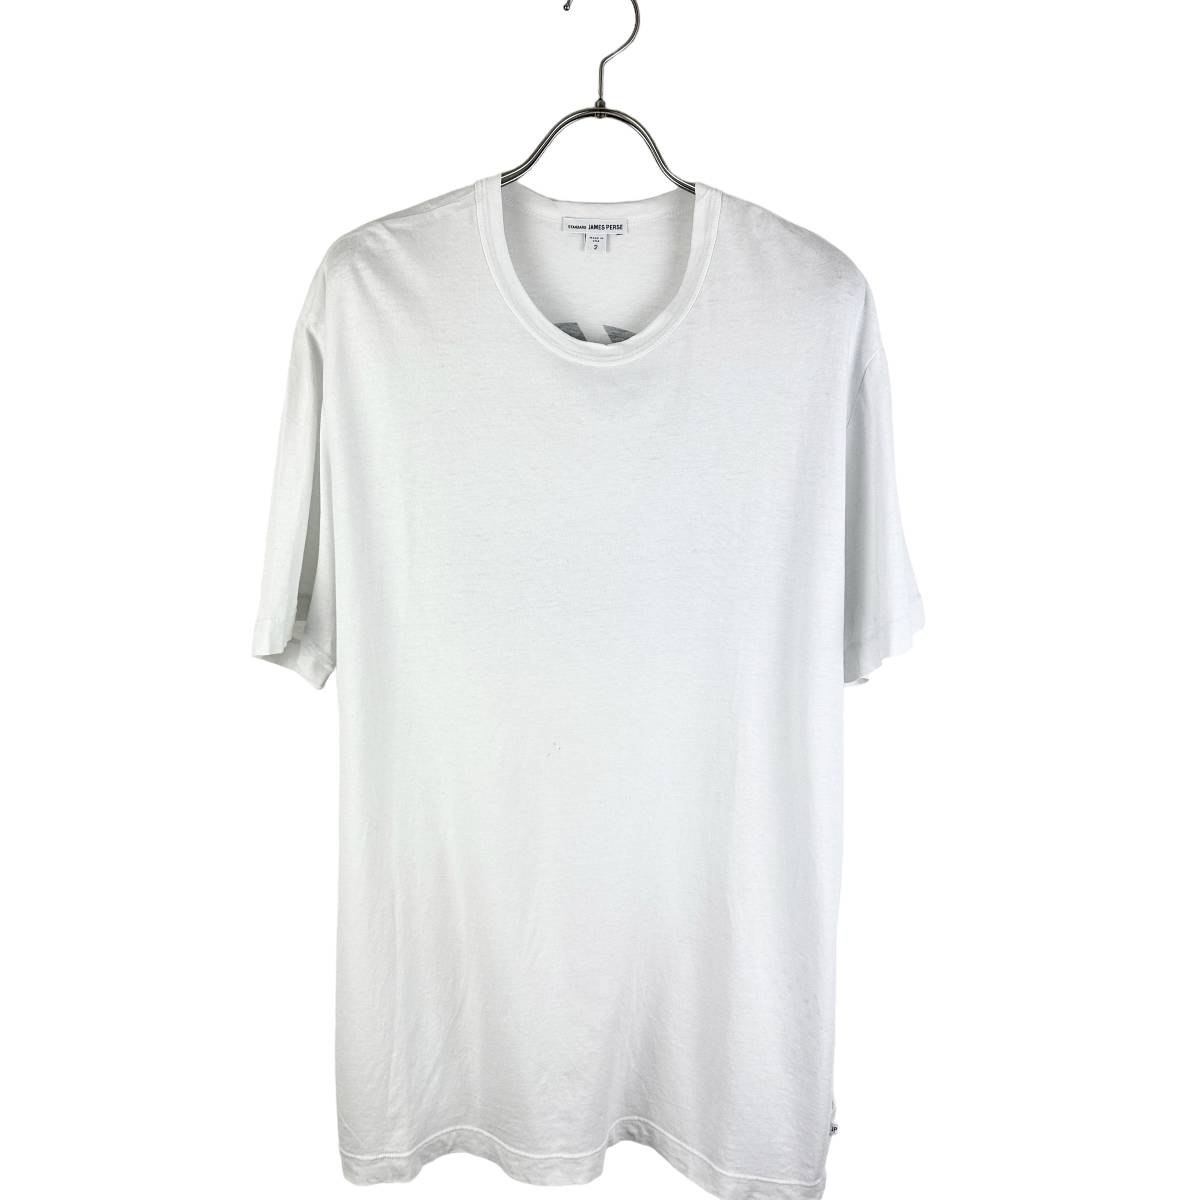 JAMESPERSE(ジェームスパース) Back Pattern Plain T Shirt (white)_画像2